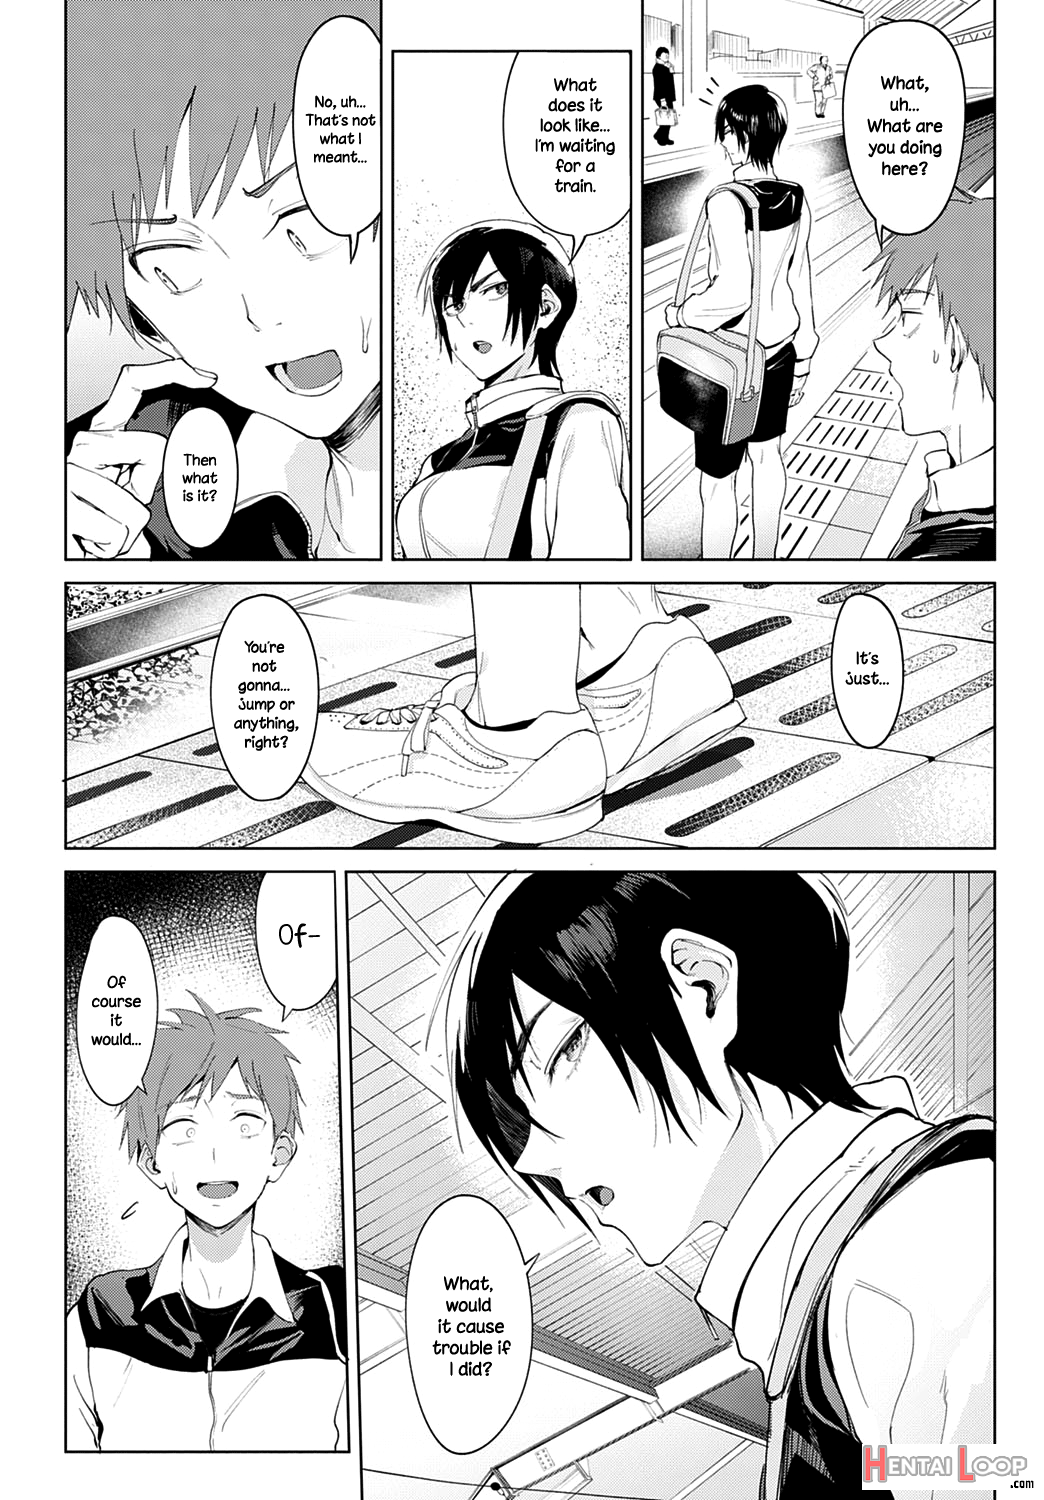 Chikihouyuu page 2